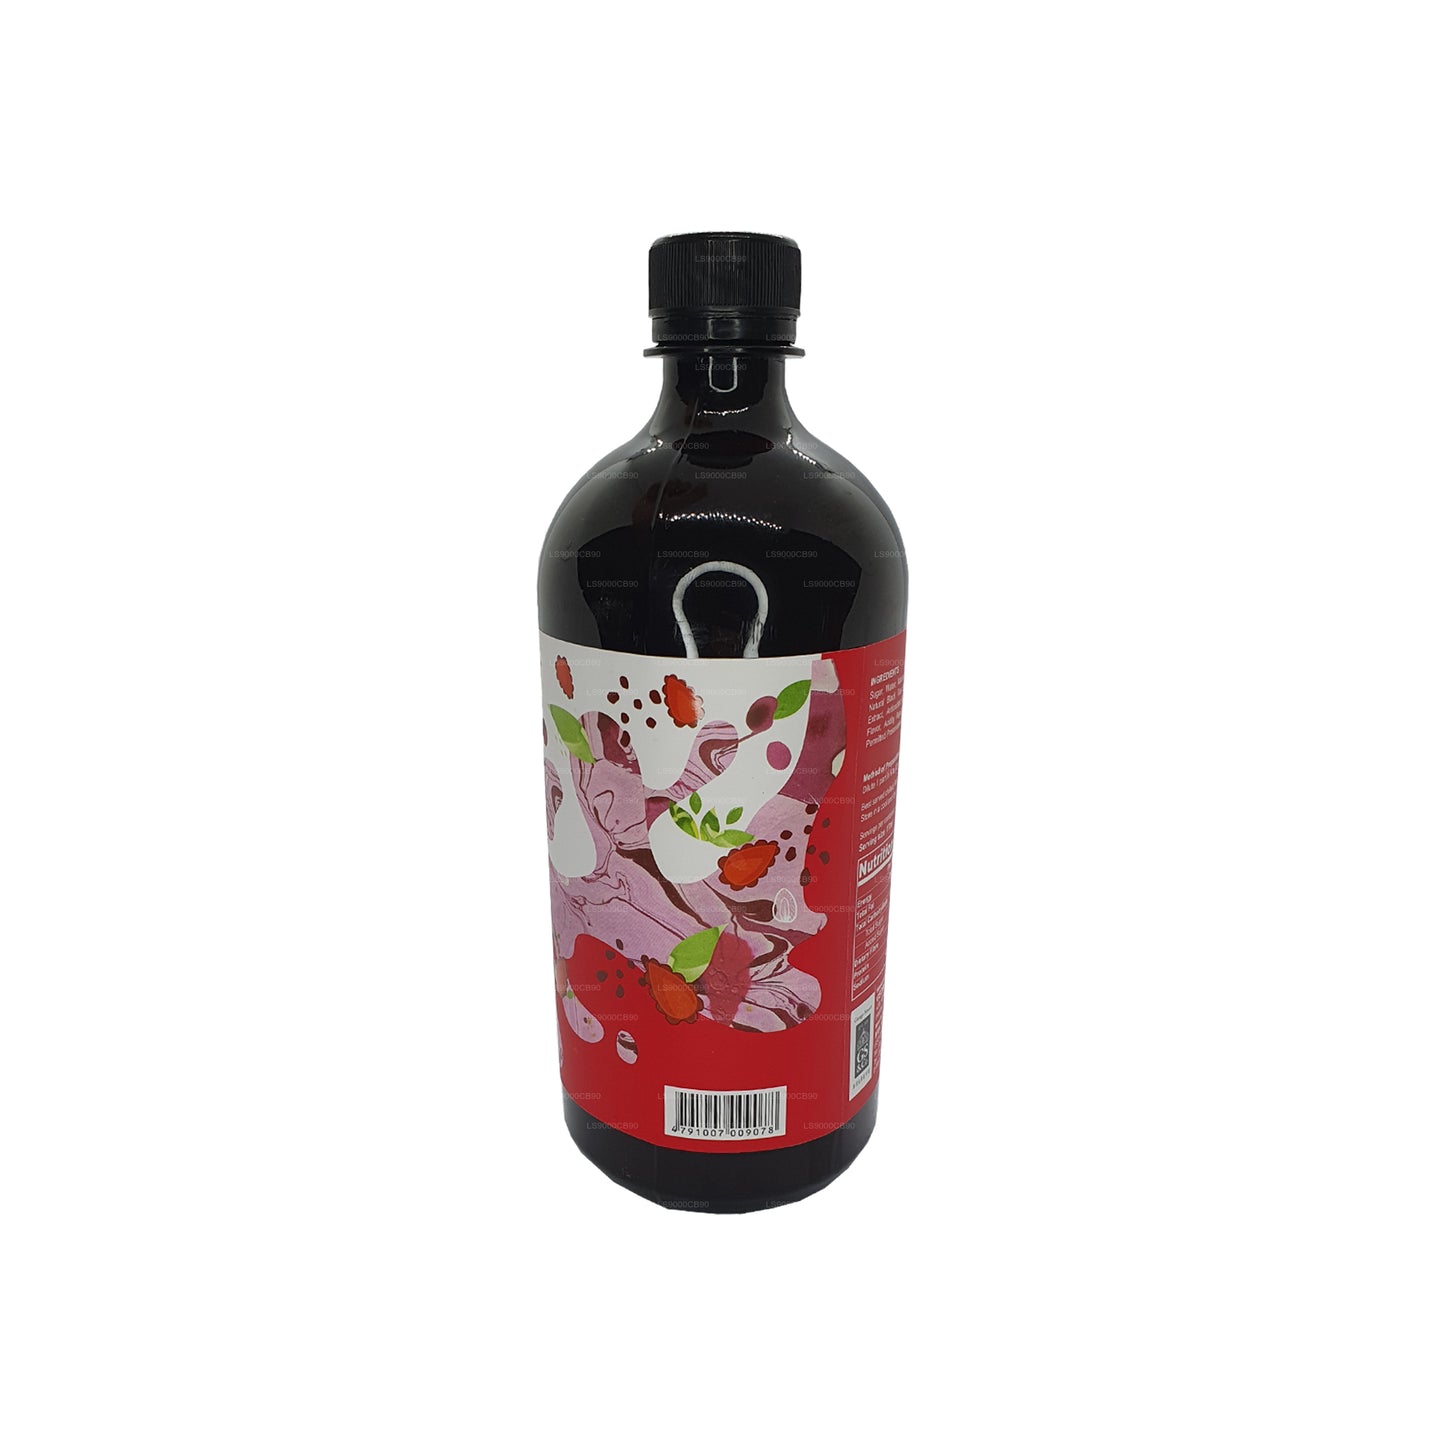 Heladiv Strawberry Ice Tea Syrup (750ml)